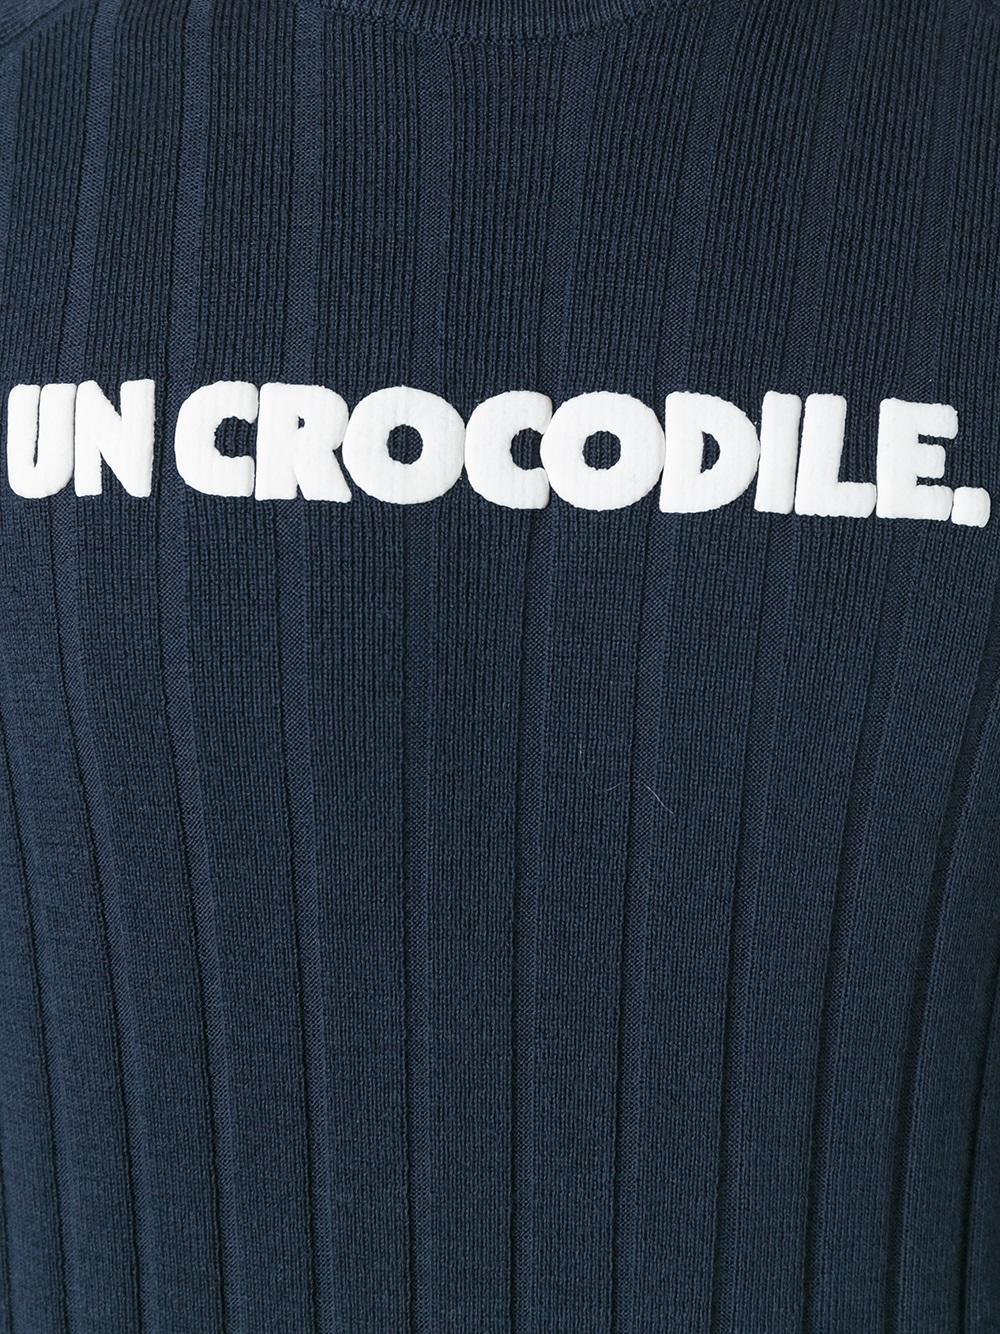 un crocodile sweatshirt